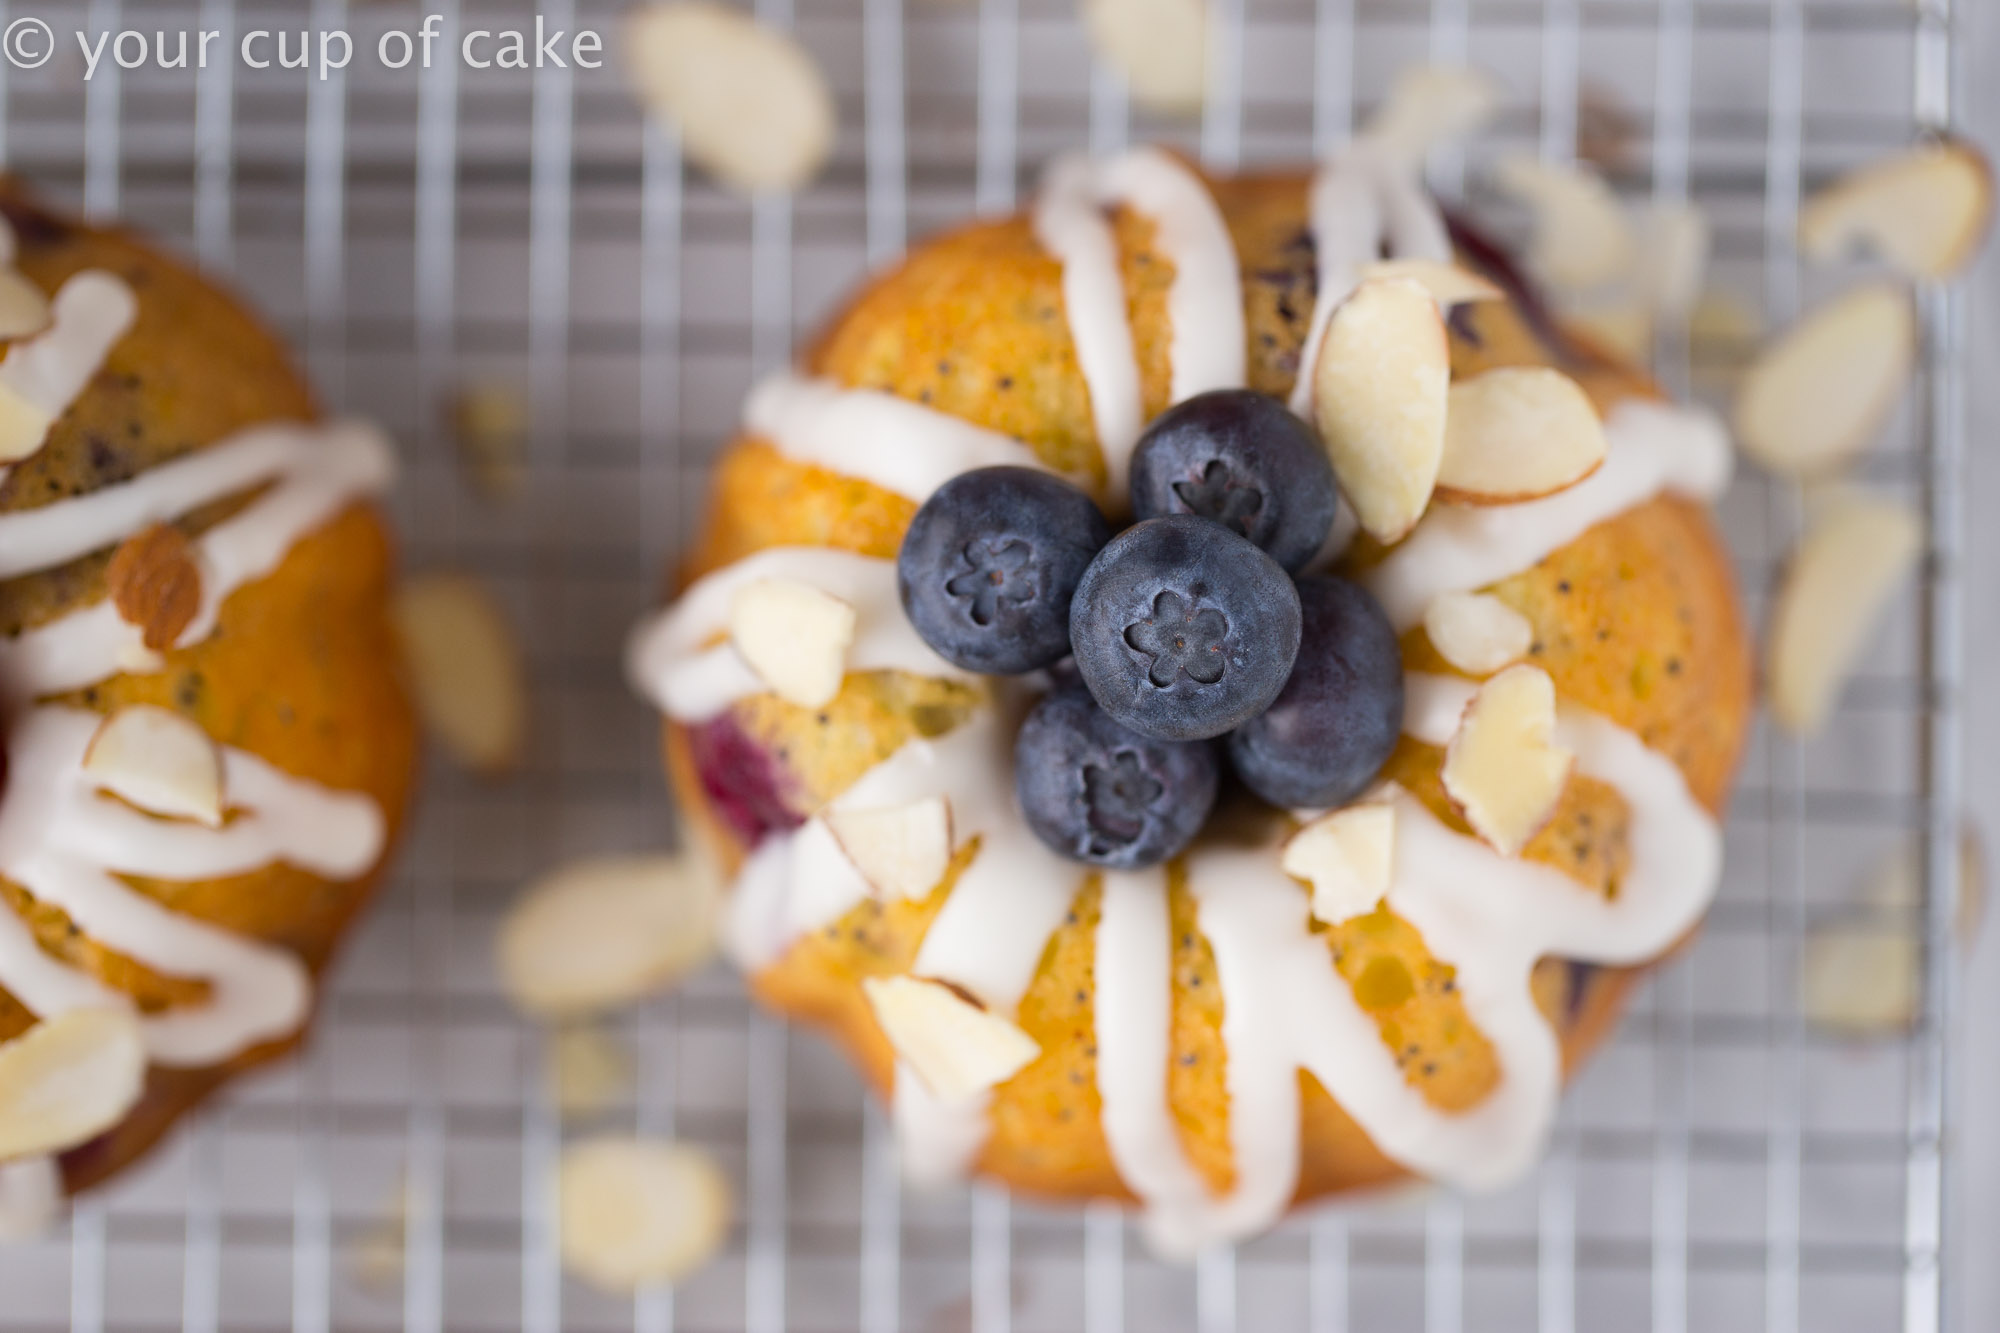 Lemon Blueberry Bundt Cakes with Almond Glaze, these are AMAZING!